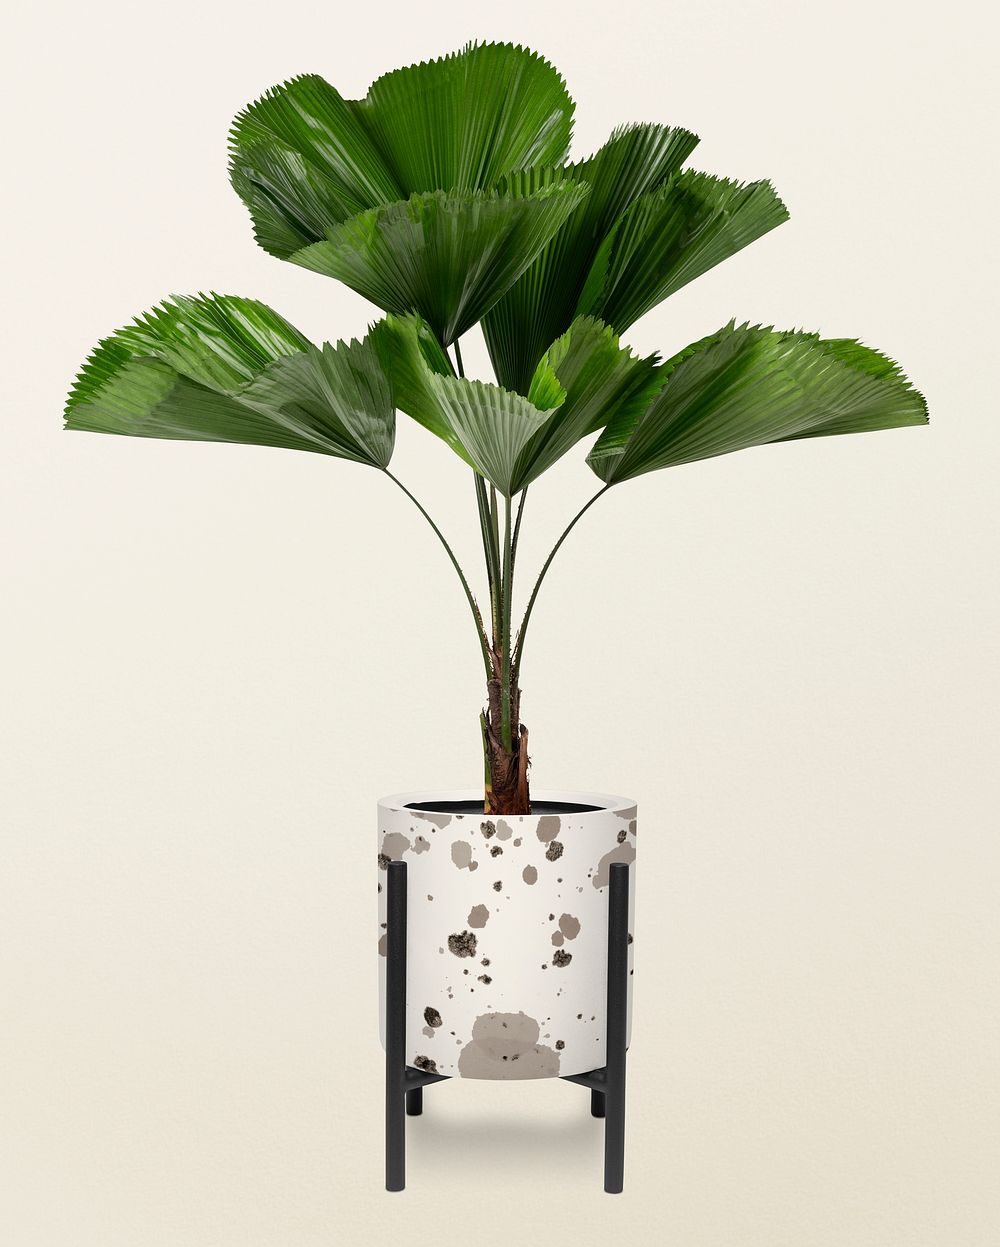 Ruffled leaf plant in a pot